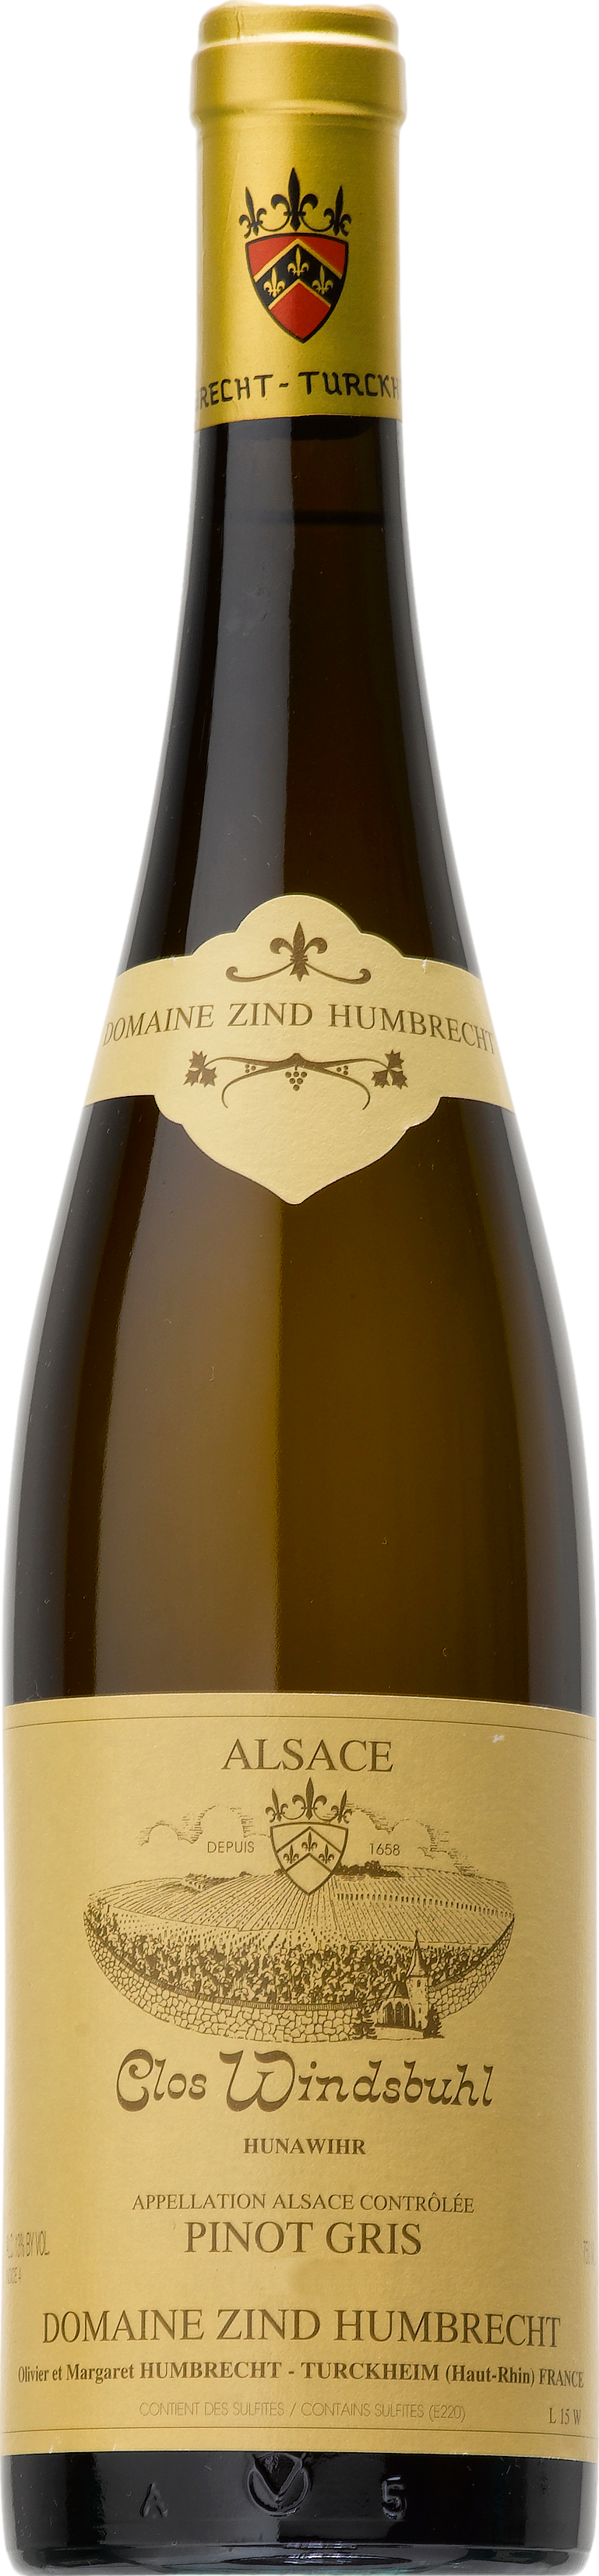 Domaine Zind-Humbrecht Pinot Gris Clos Windsbuhl 2015 Domaine Zind-Humbrecht 8wines DACH